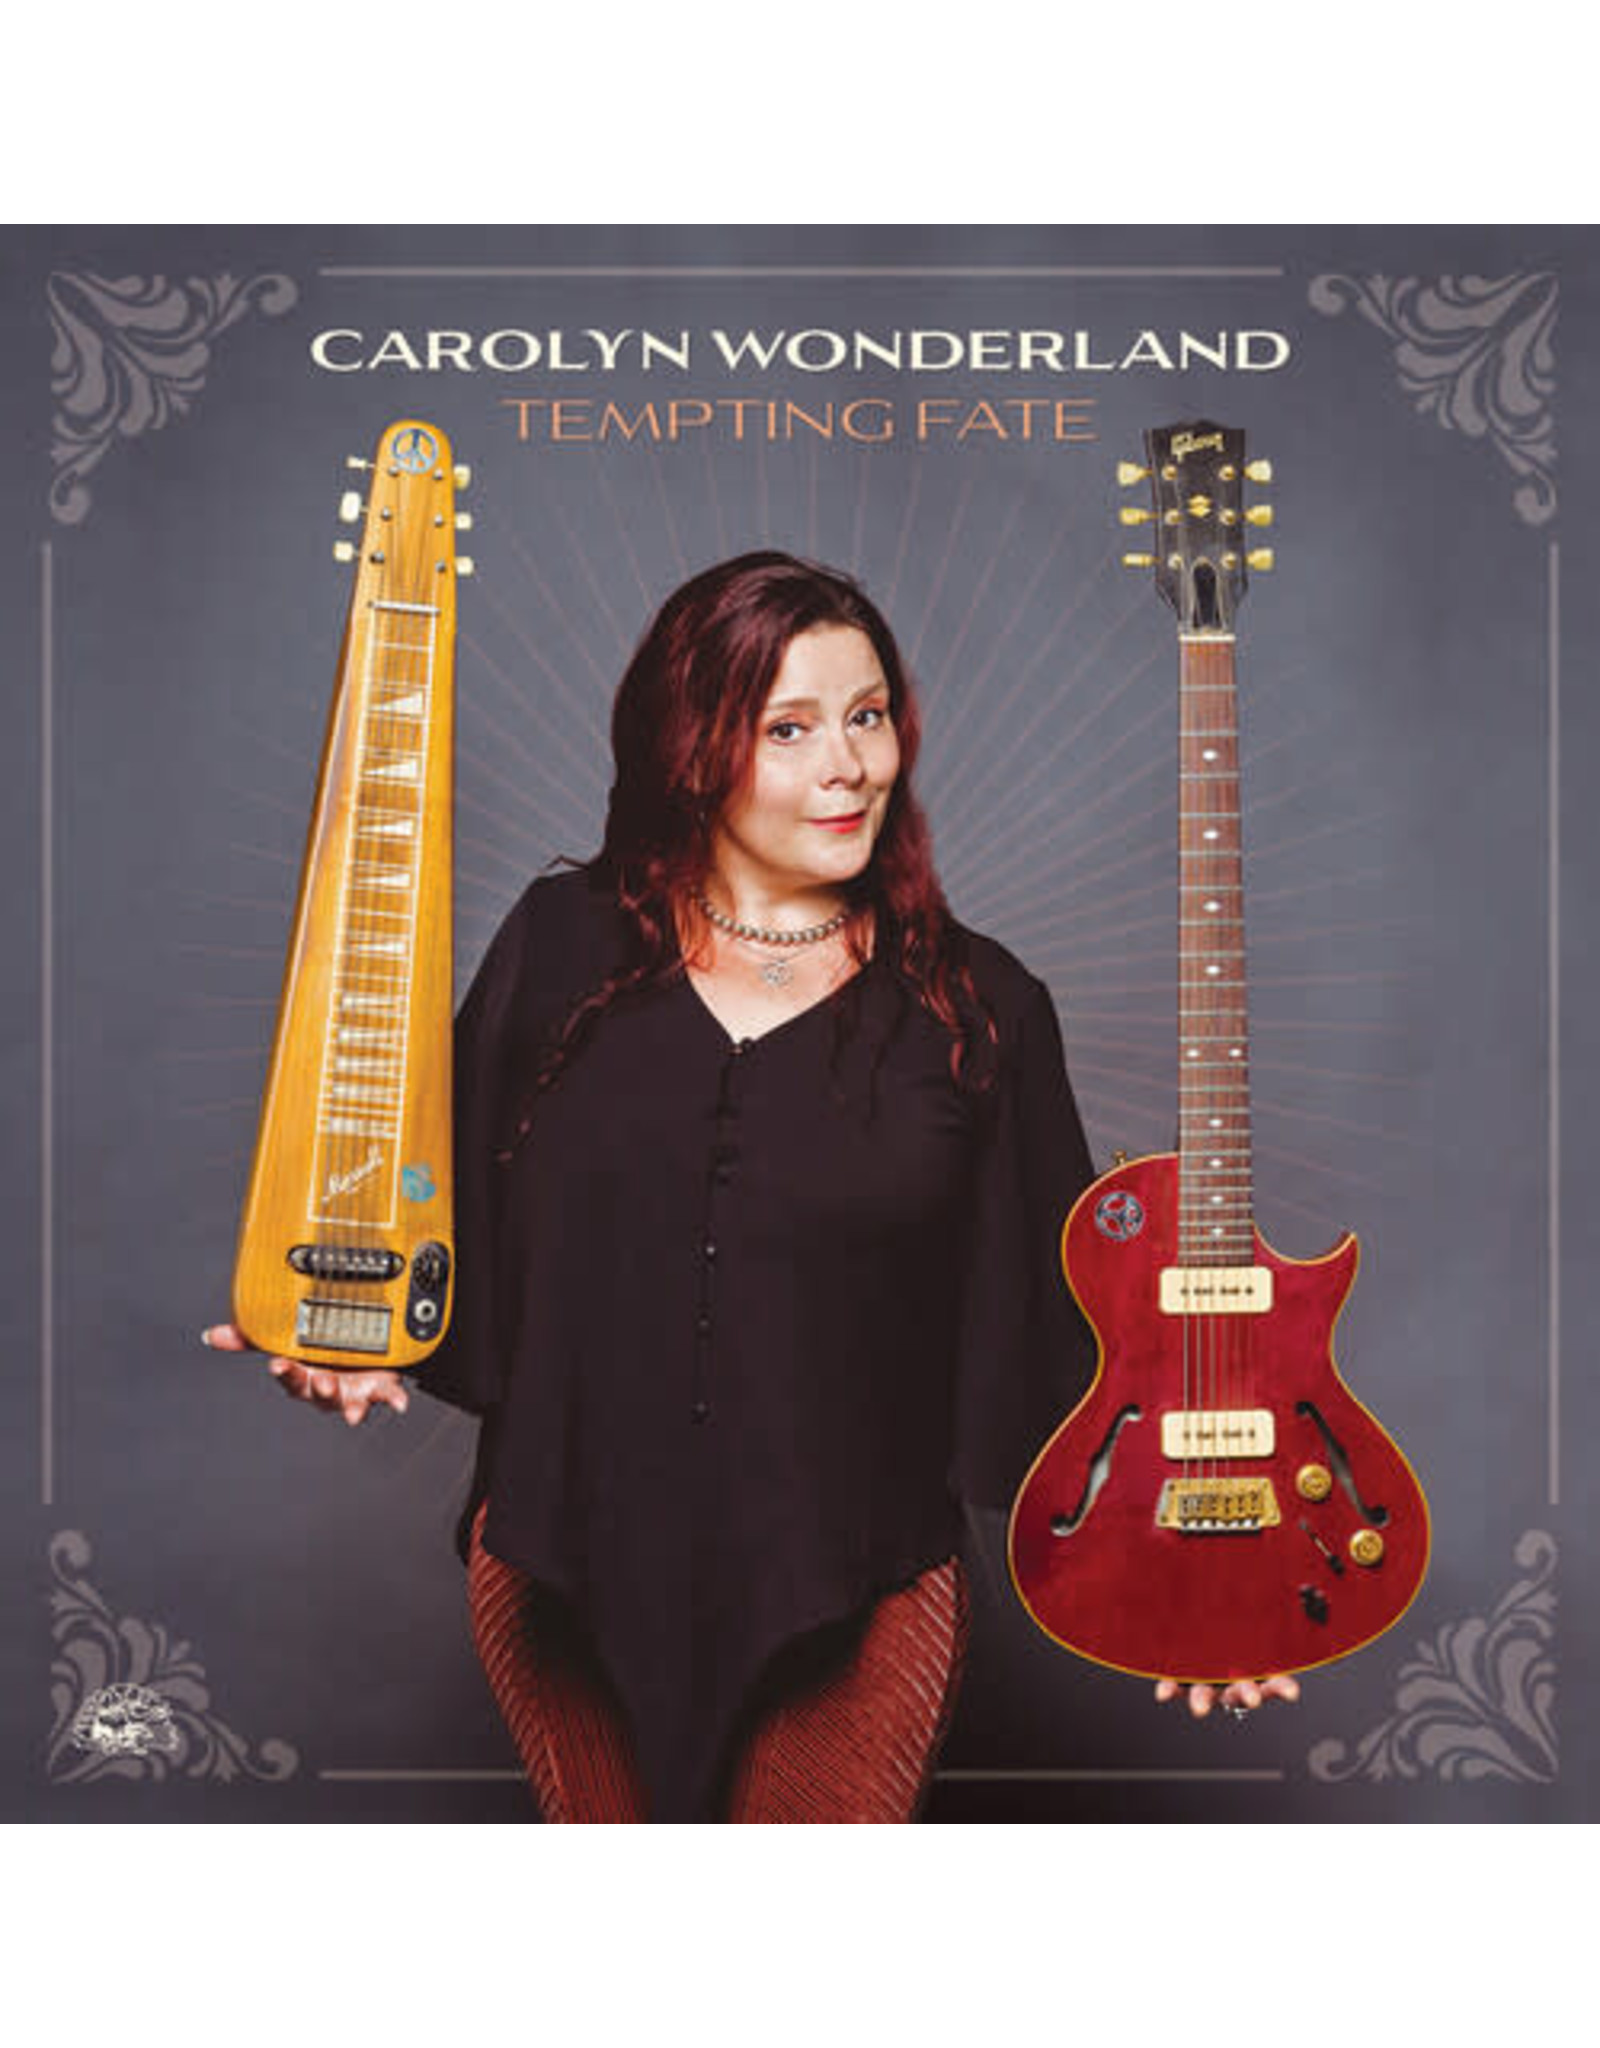 Wonderland,Carolyn / Tempting Fate (Orange Vinyl)